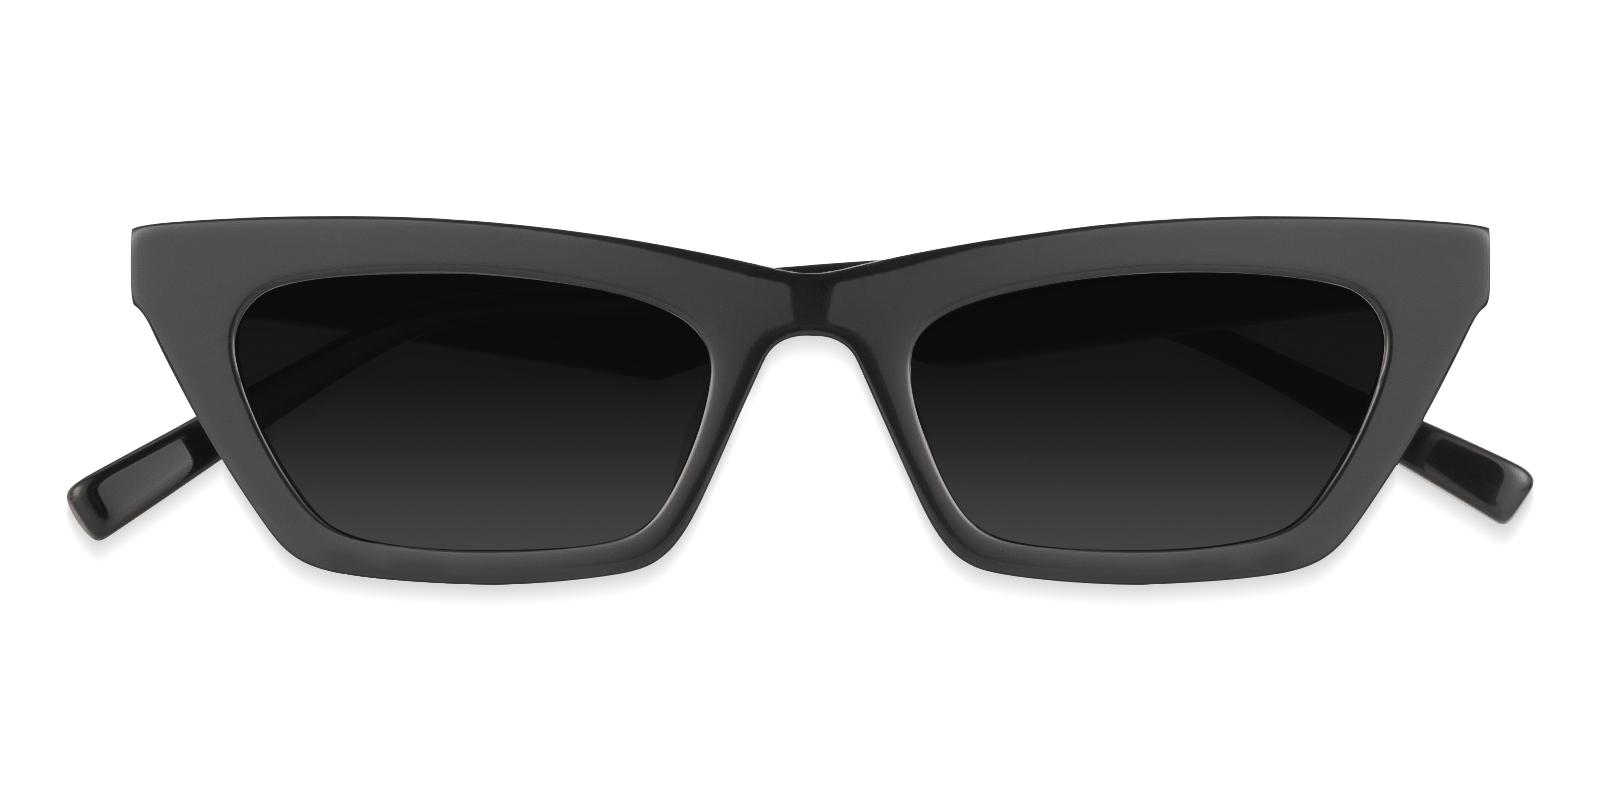 KJ Black Acetate Fashion , Sunglasses , UniversalBridgeFit Frames from ABBE Glasses